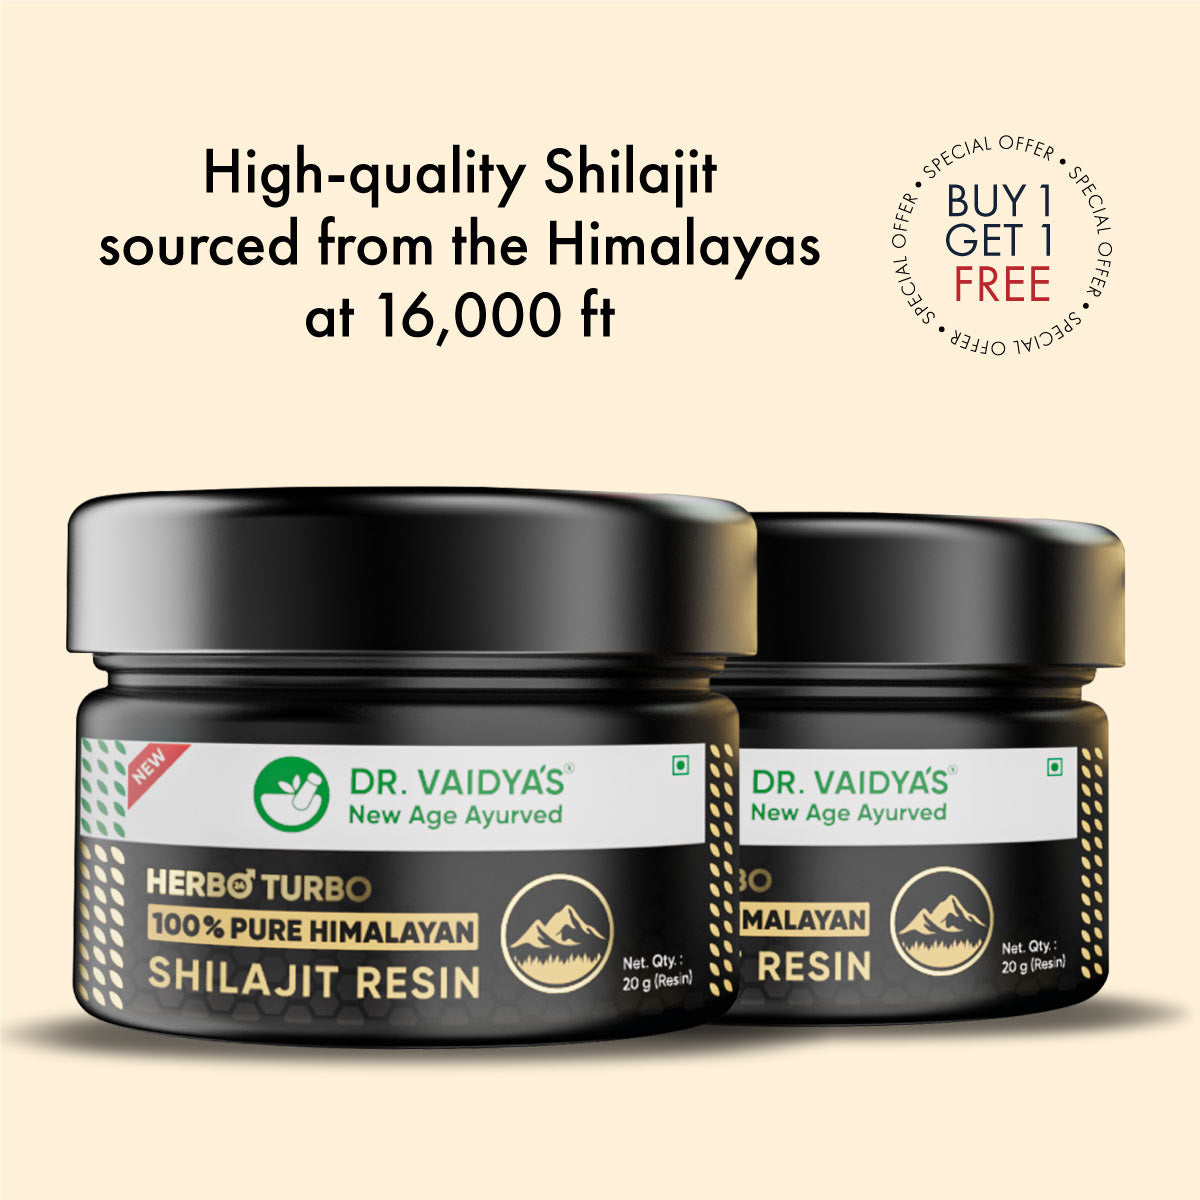 Herbo24Turbo Shilajit Resin: Made From 100% Pure Himalayan Shilajit